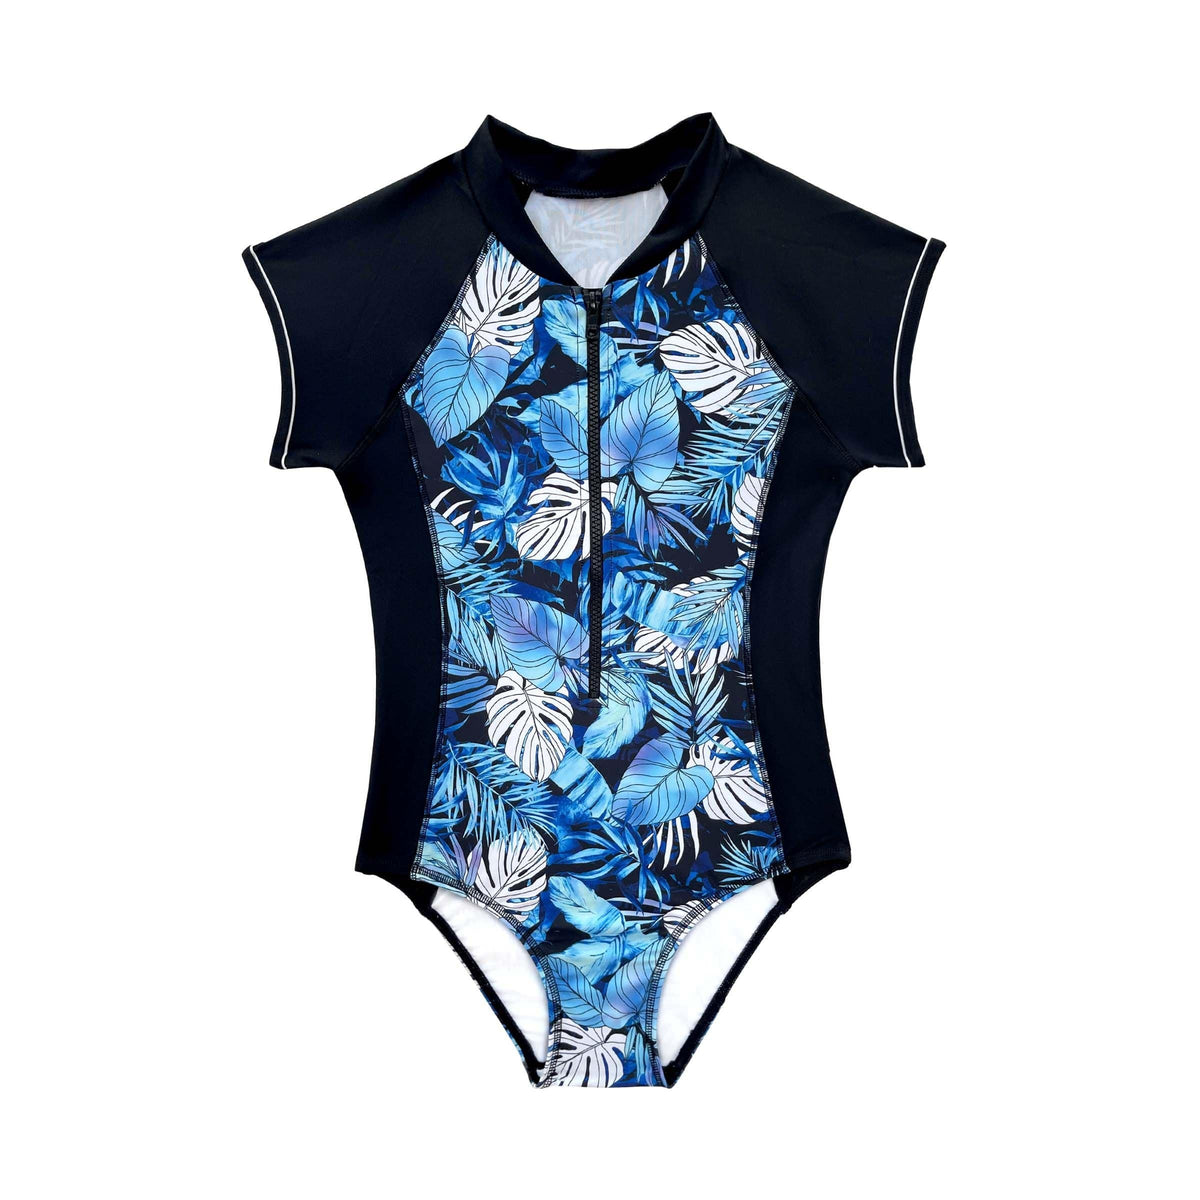 Girls Coral Coast Surfsuit - Coral Blue - Salty Ink - Splash Swimwear  - girls 8-16, Girls swimwear, Jul23, new arrivals, new kids, new swim, salty ink - Splash Swimwear 